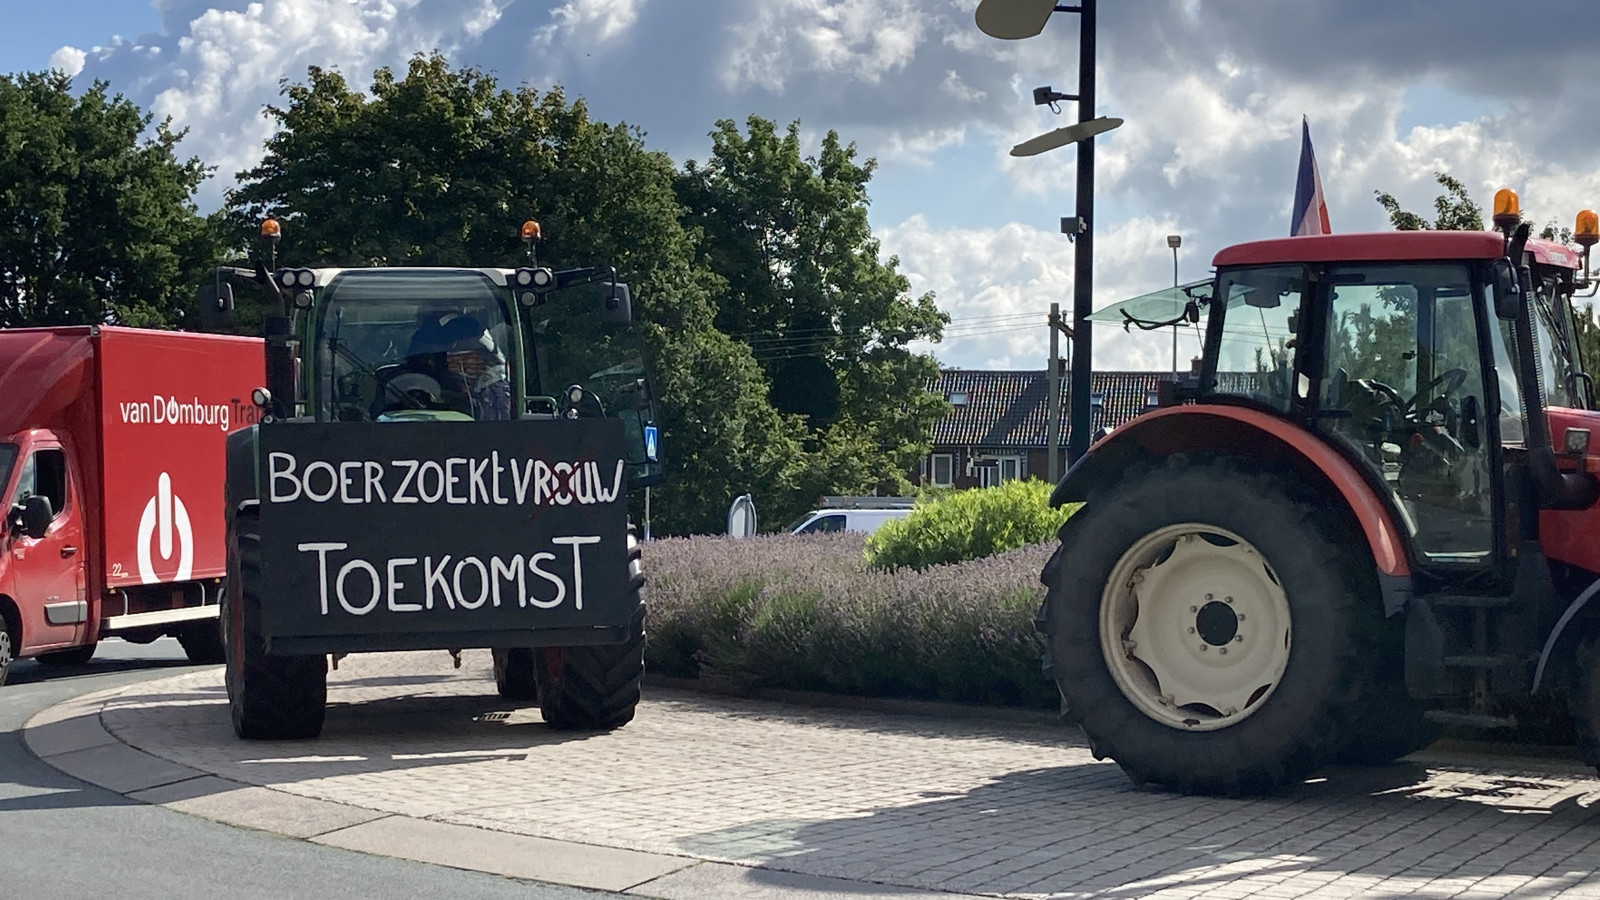 Boerenprotest Mediapark Hilversum